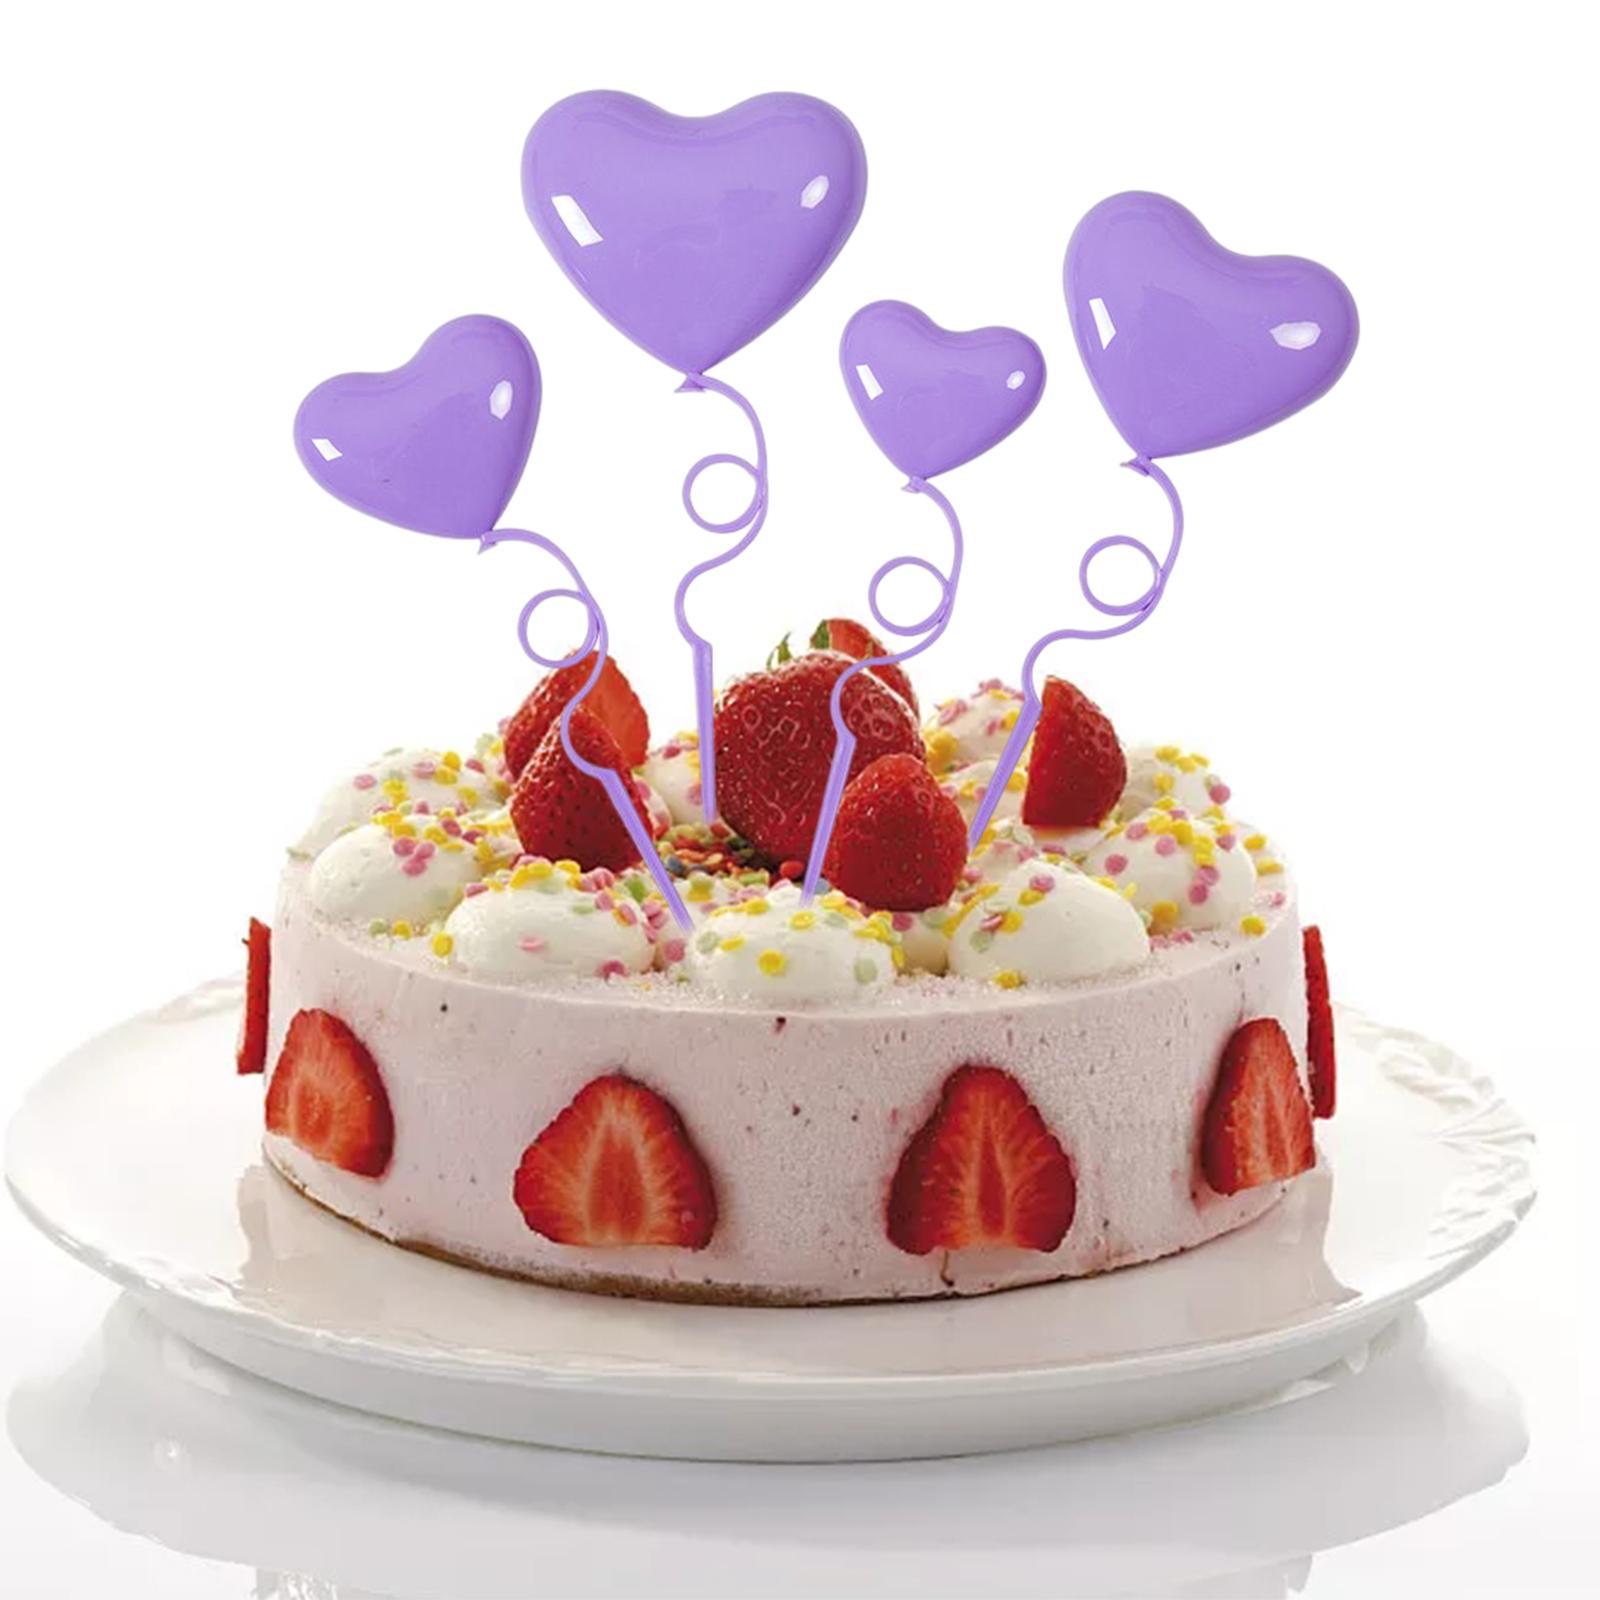 12Pcs Cake Decorations Heart Shape 3D Love Ornaments